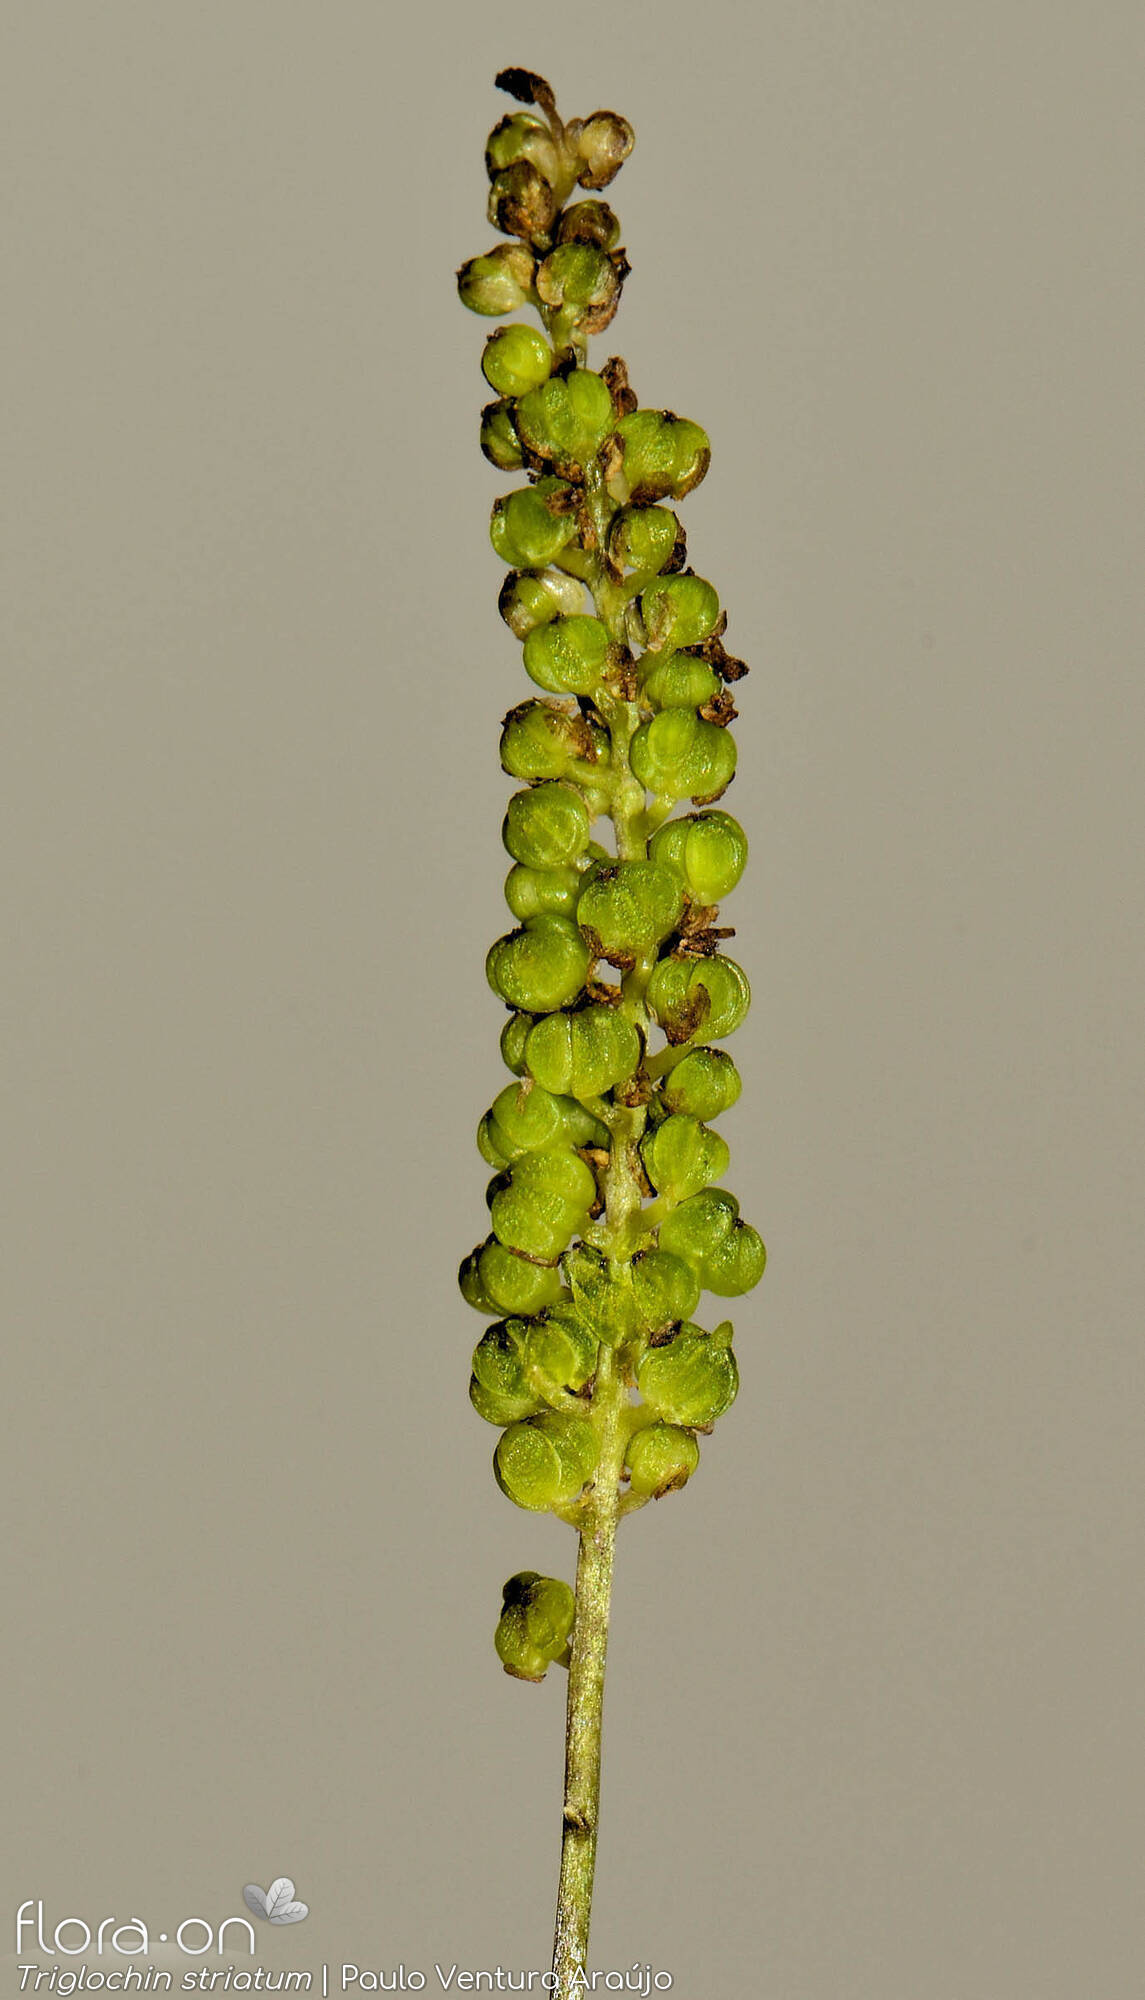 Triglochin striatum - Flor (geral) | Paulo Ventura Araújo; CC BY-NC 4.0